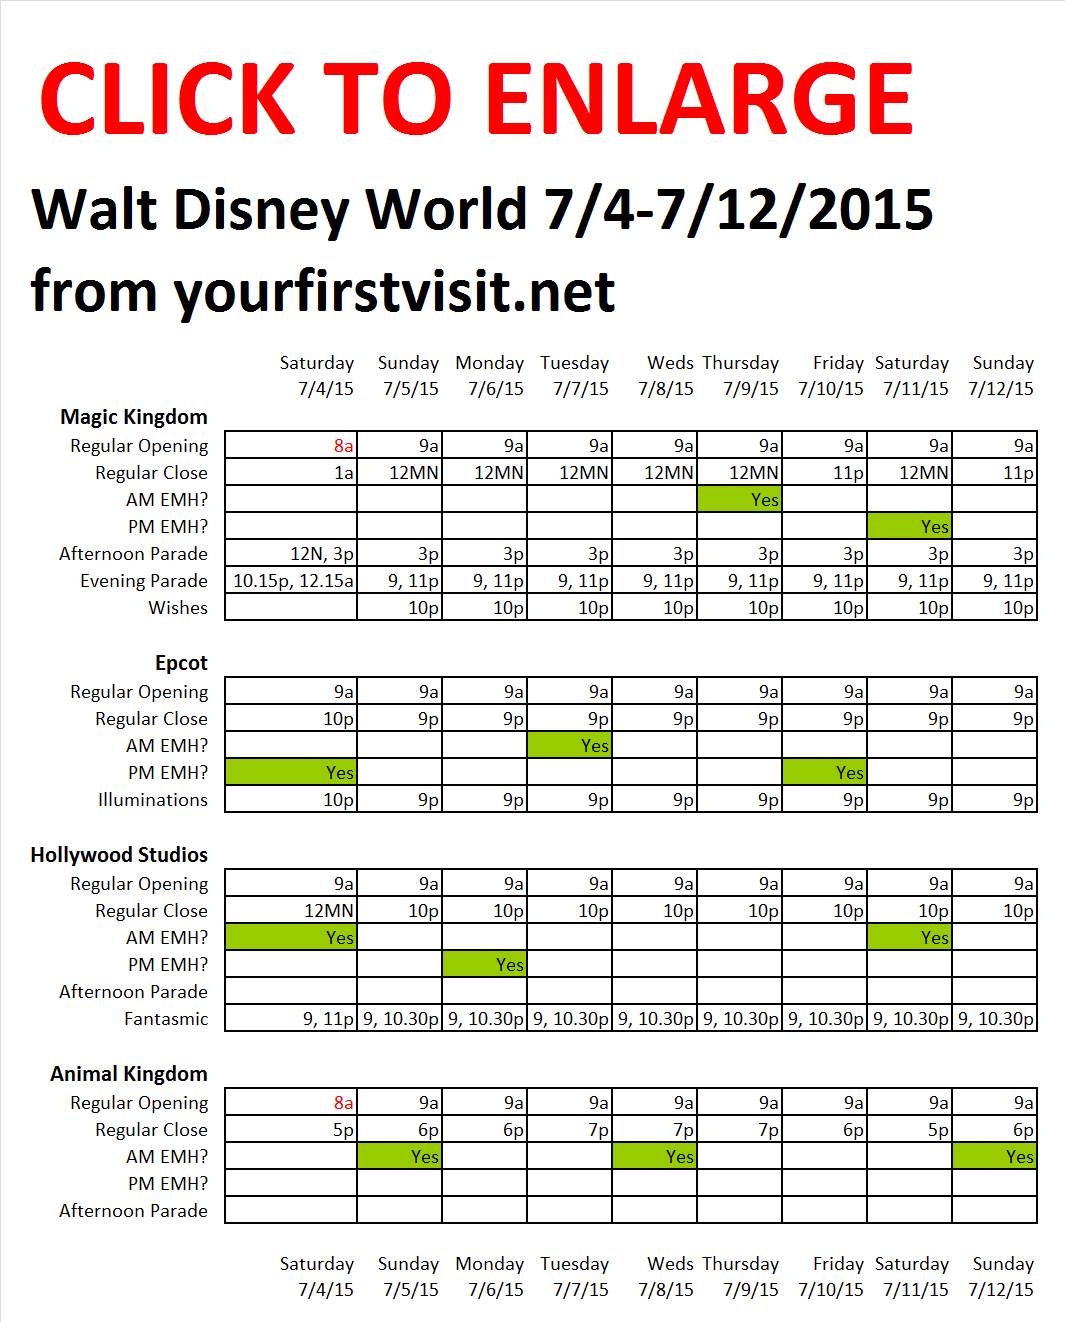 Disney World 7-4 to 7-12-2015 from yourfirstvisit.net